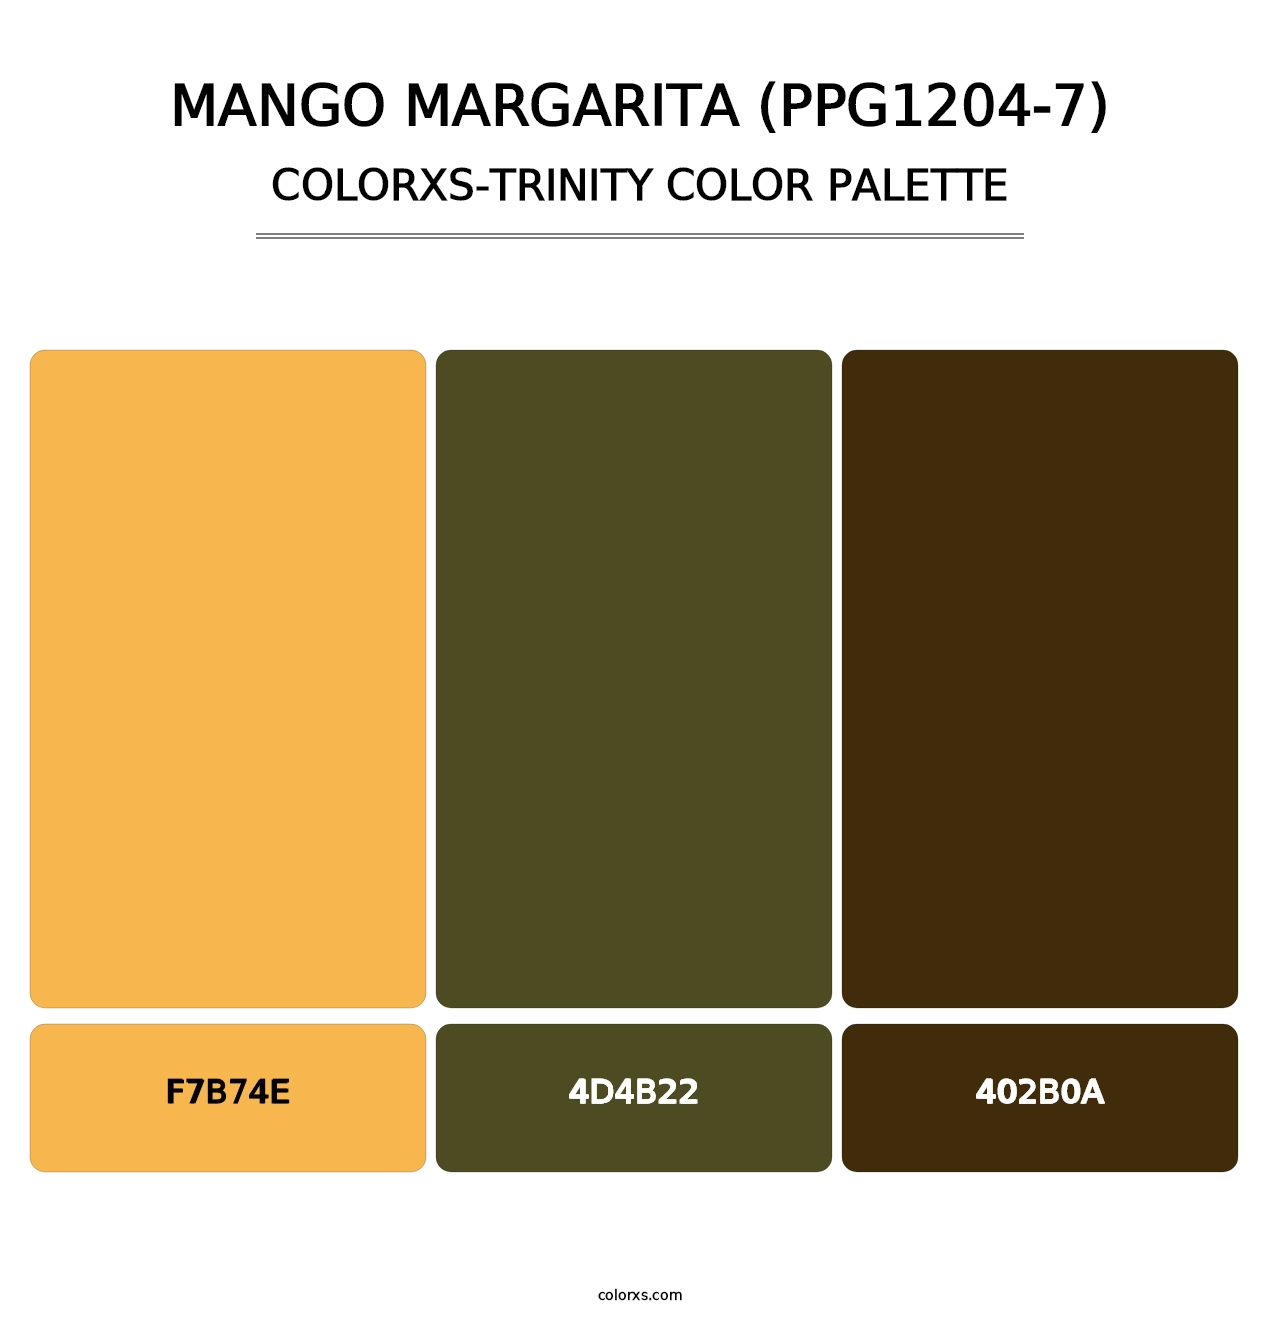 Mango Margarita (PPG1204-7) - Colorxs Trinity Palette